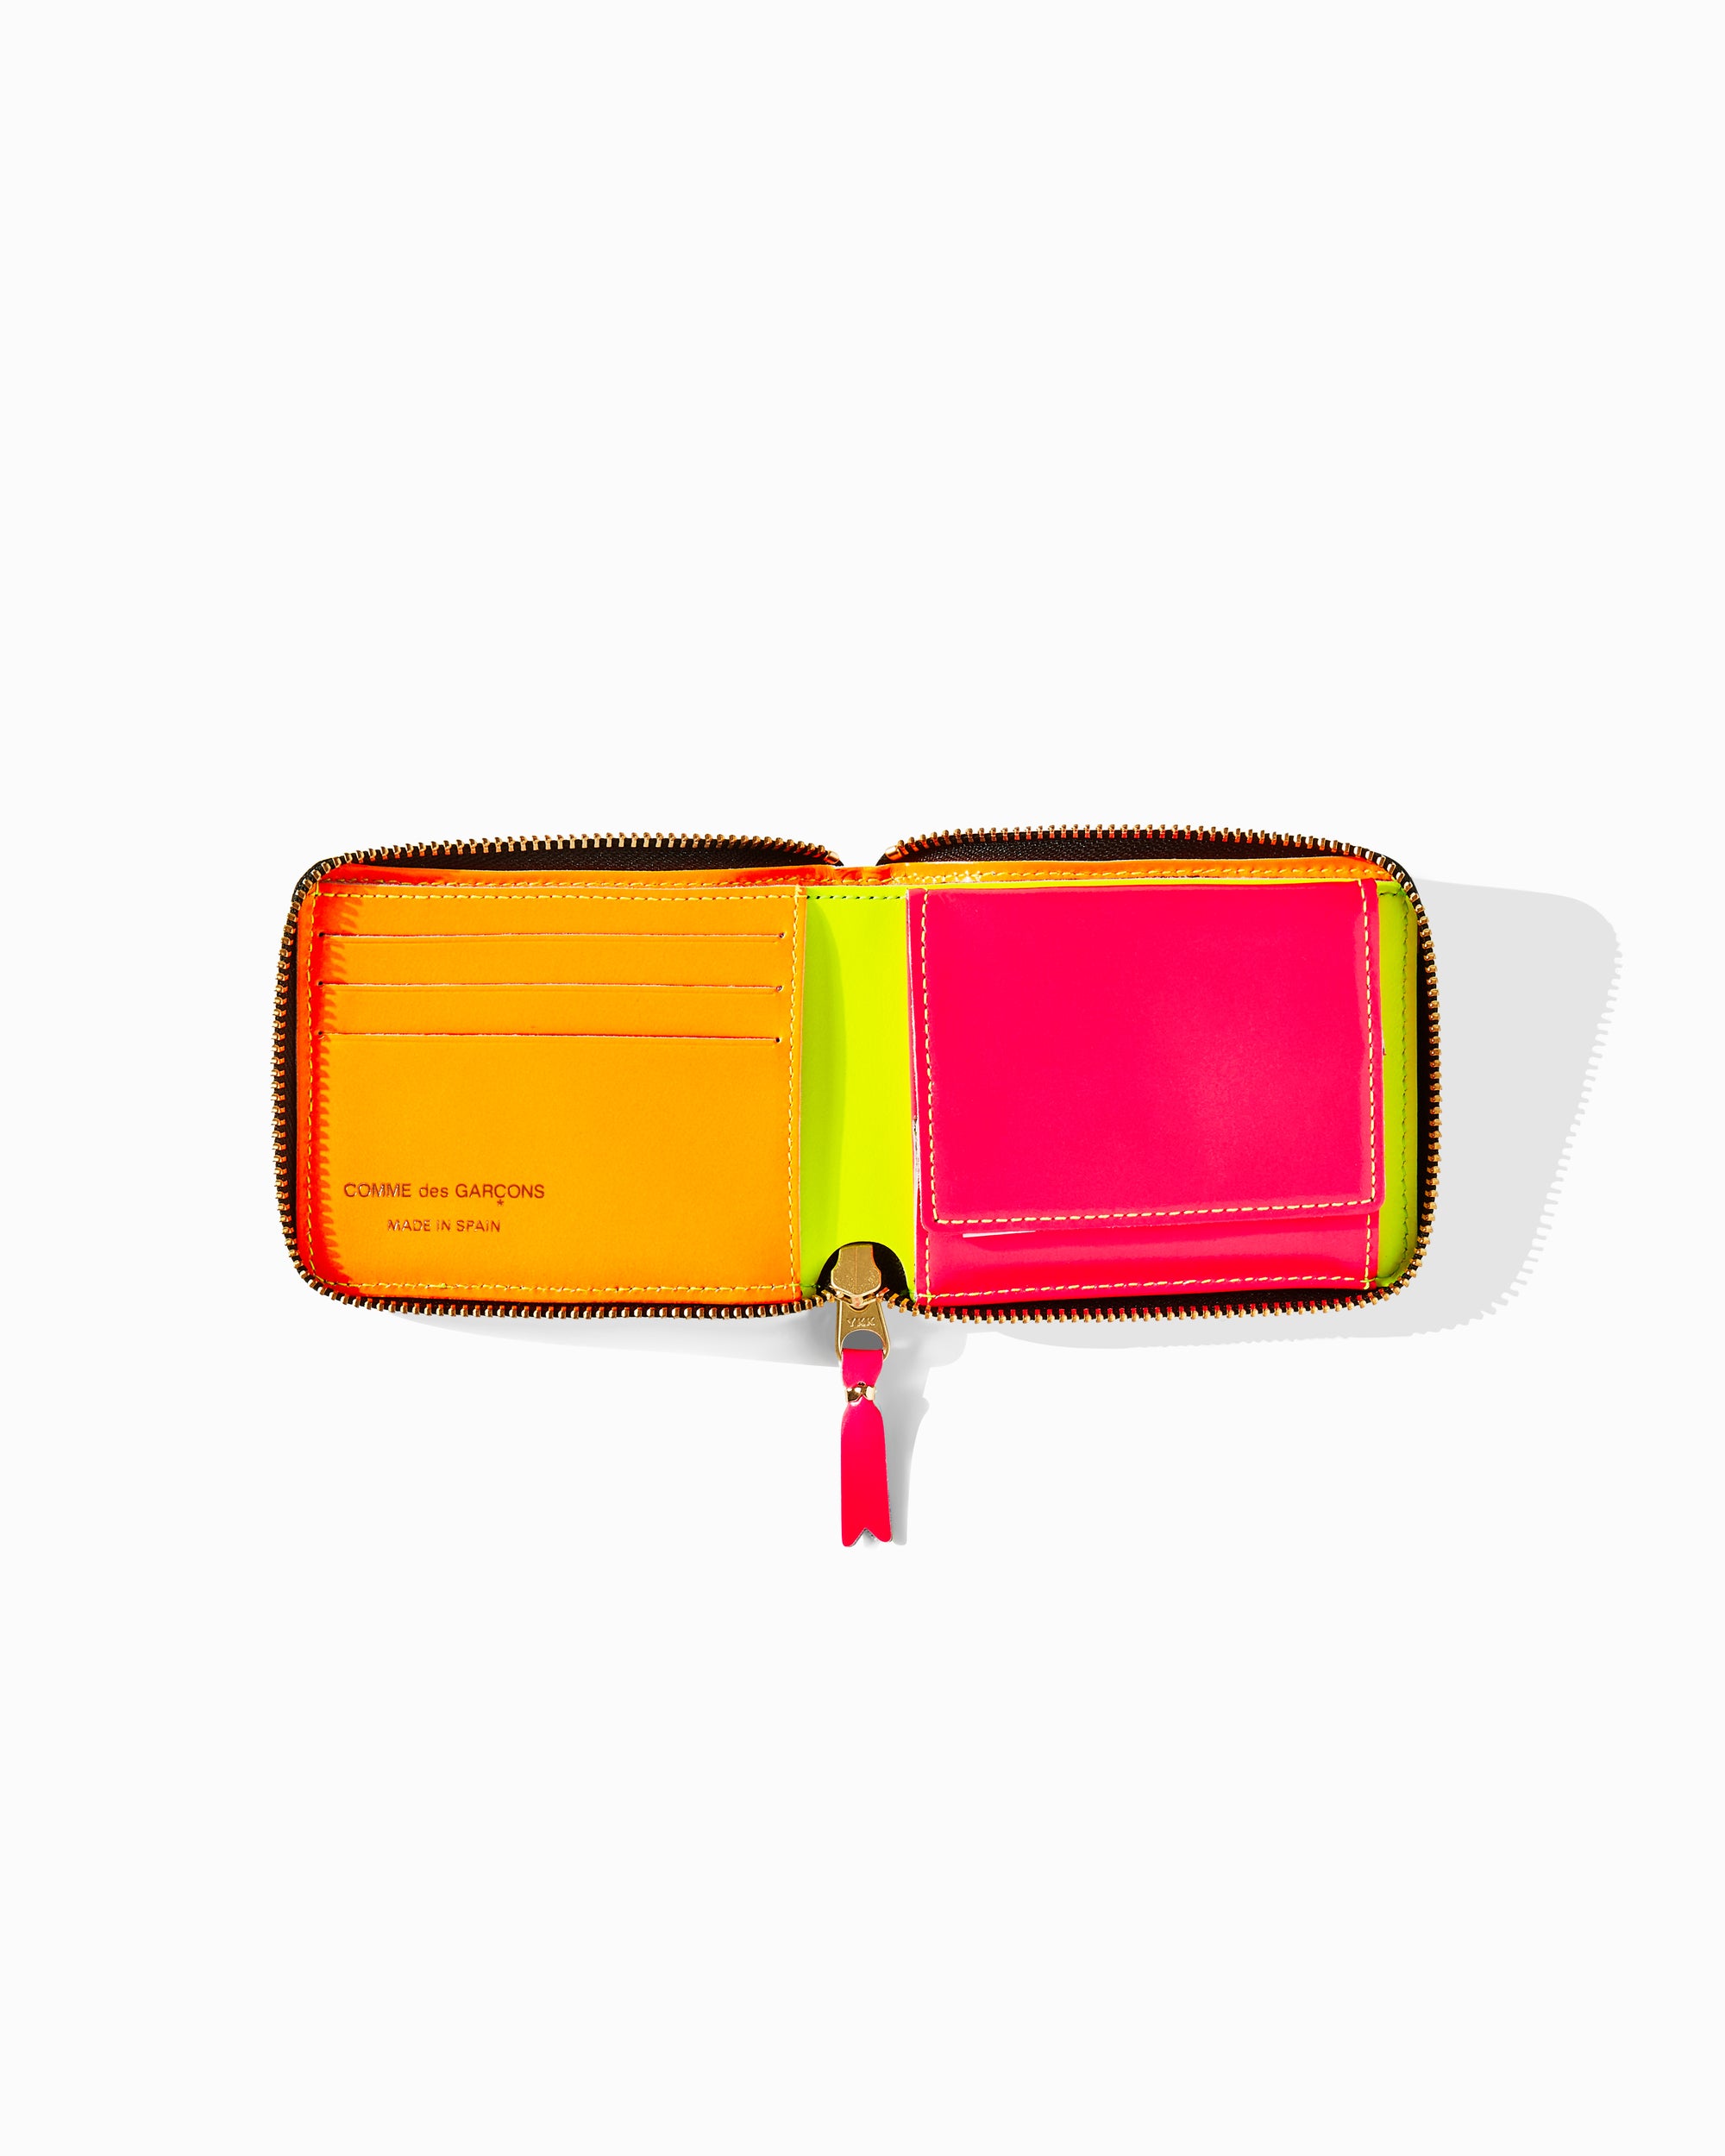 CDG Wallet - Super Fluo Full Zip Around Wallet - (Yellow/Orange SA7100SF) view 3